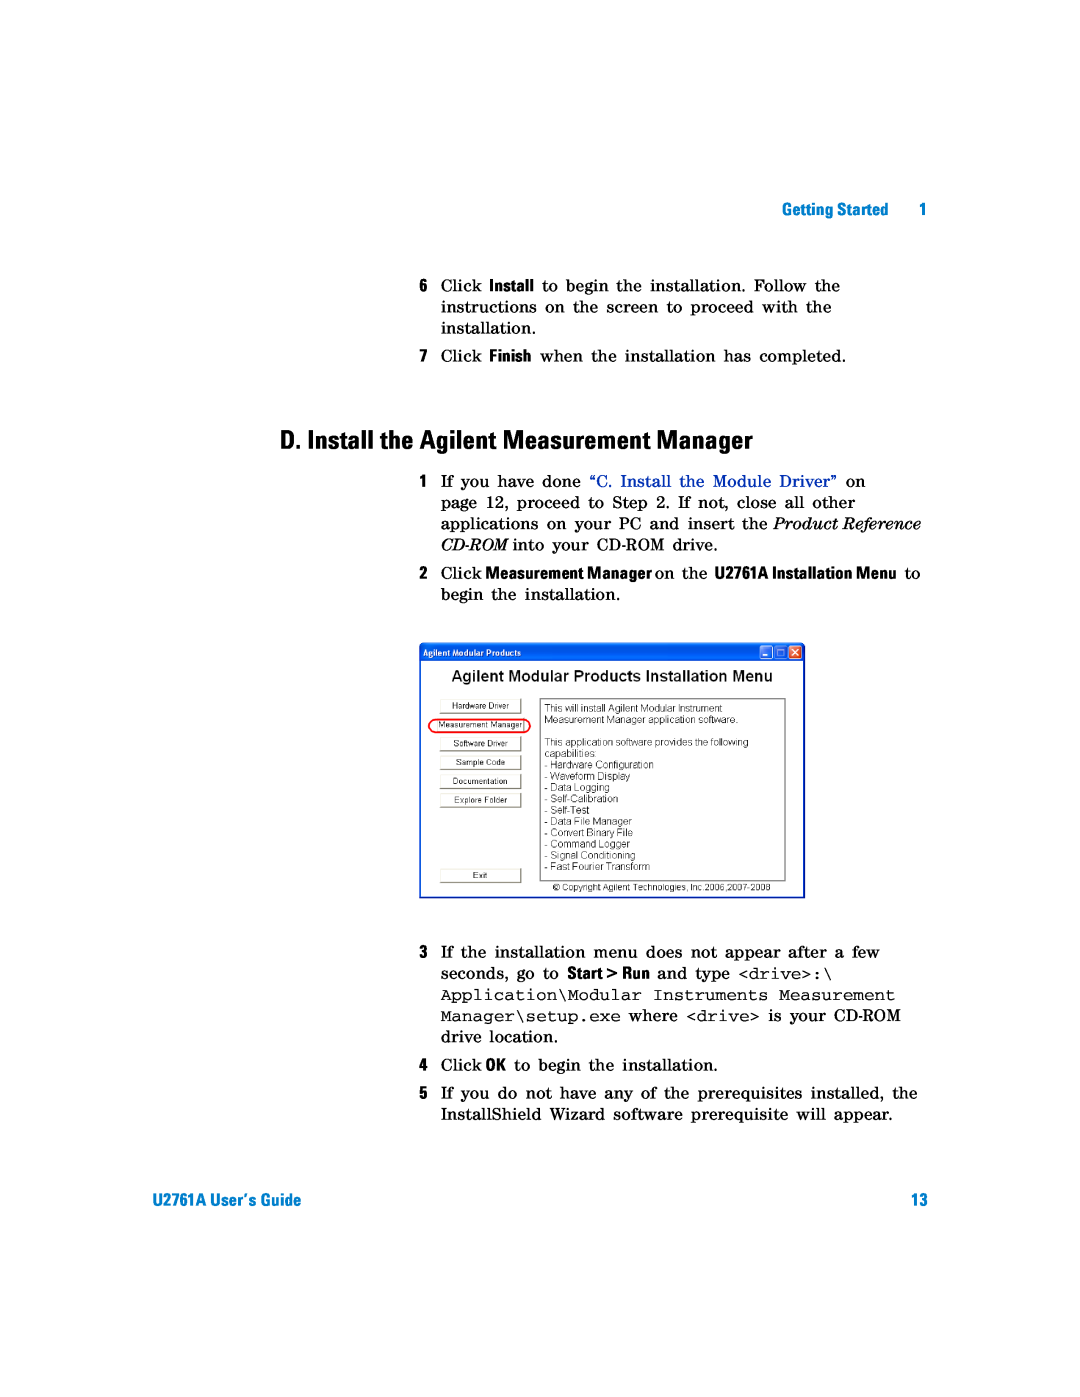 Agilent Technologies manual D. Install the Agilent Measurement Manager, U2761A User’s Guide 